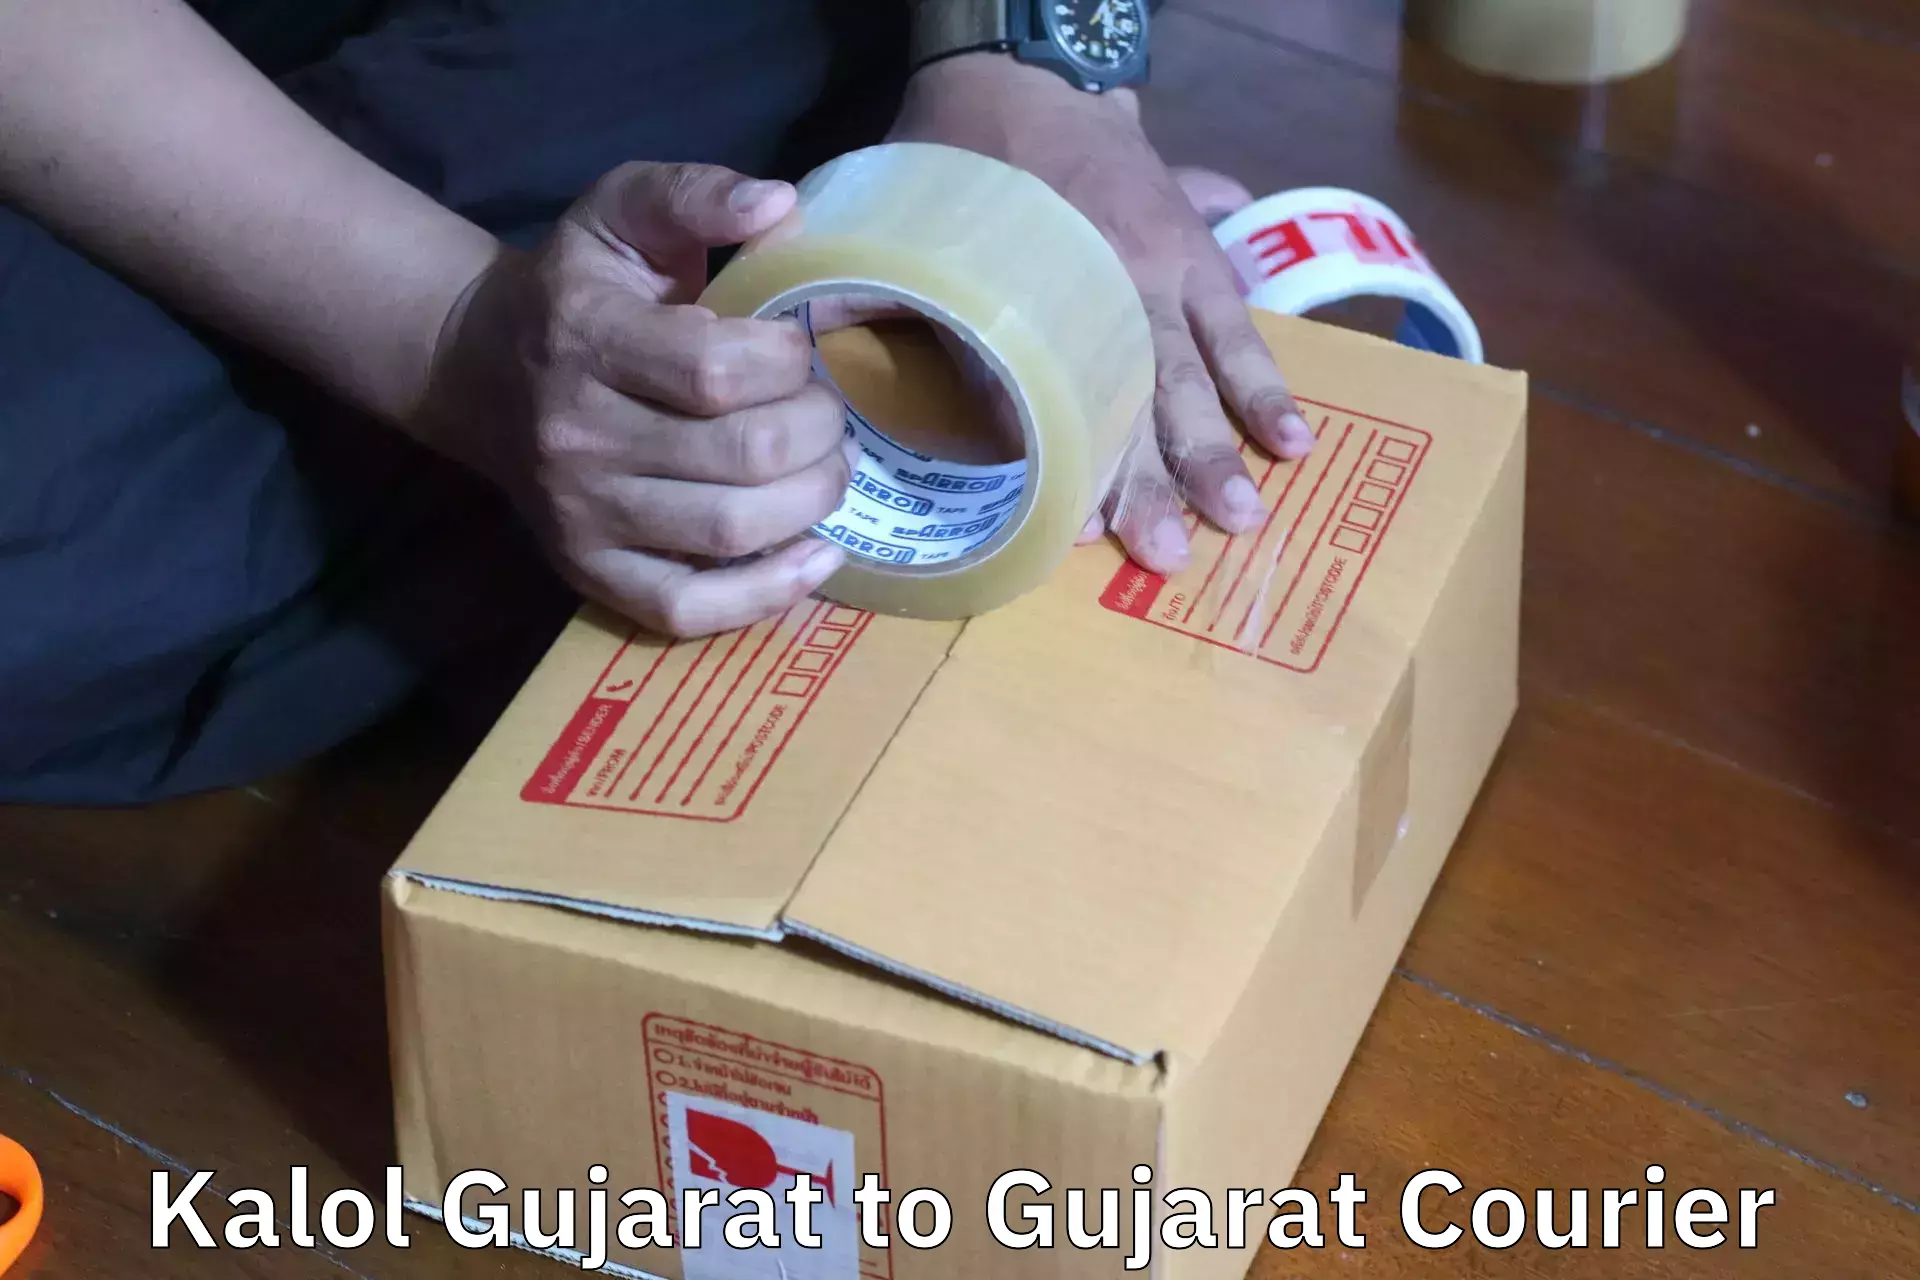 Professional furniture movers Kalol Gujarat to Prantij